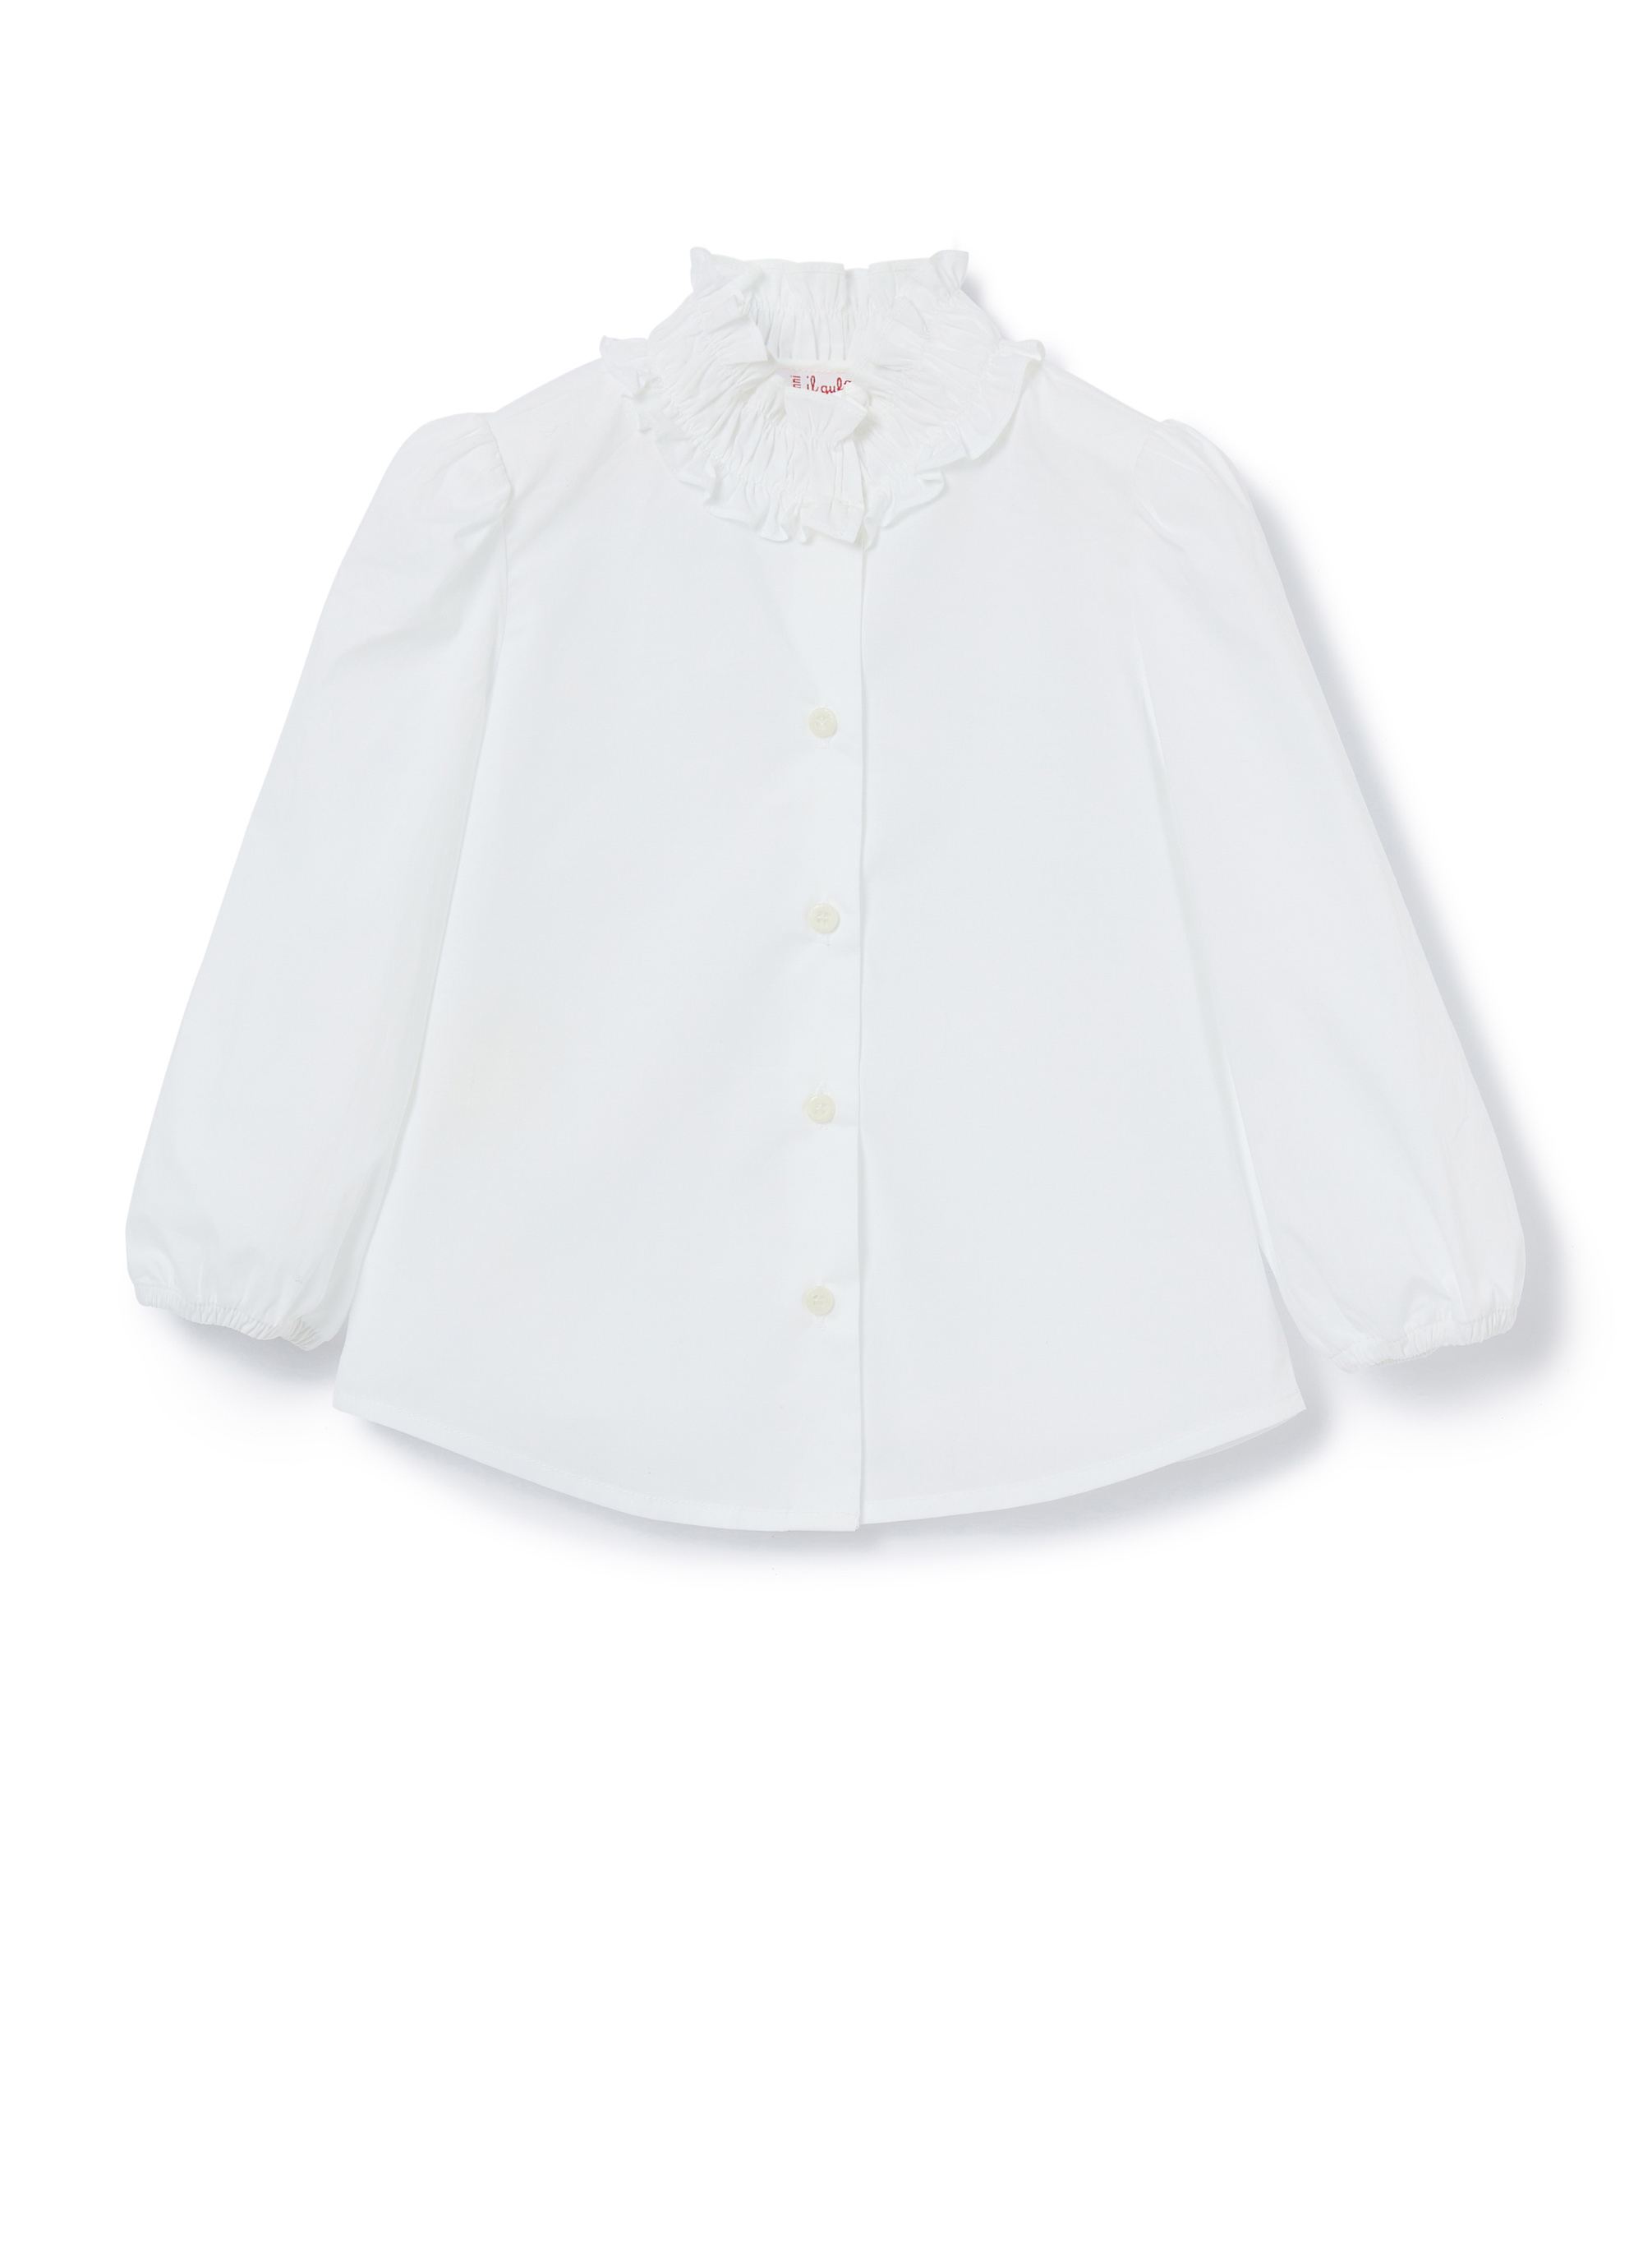 White shirt with ruff collar - White | Il Gufo